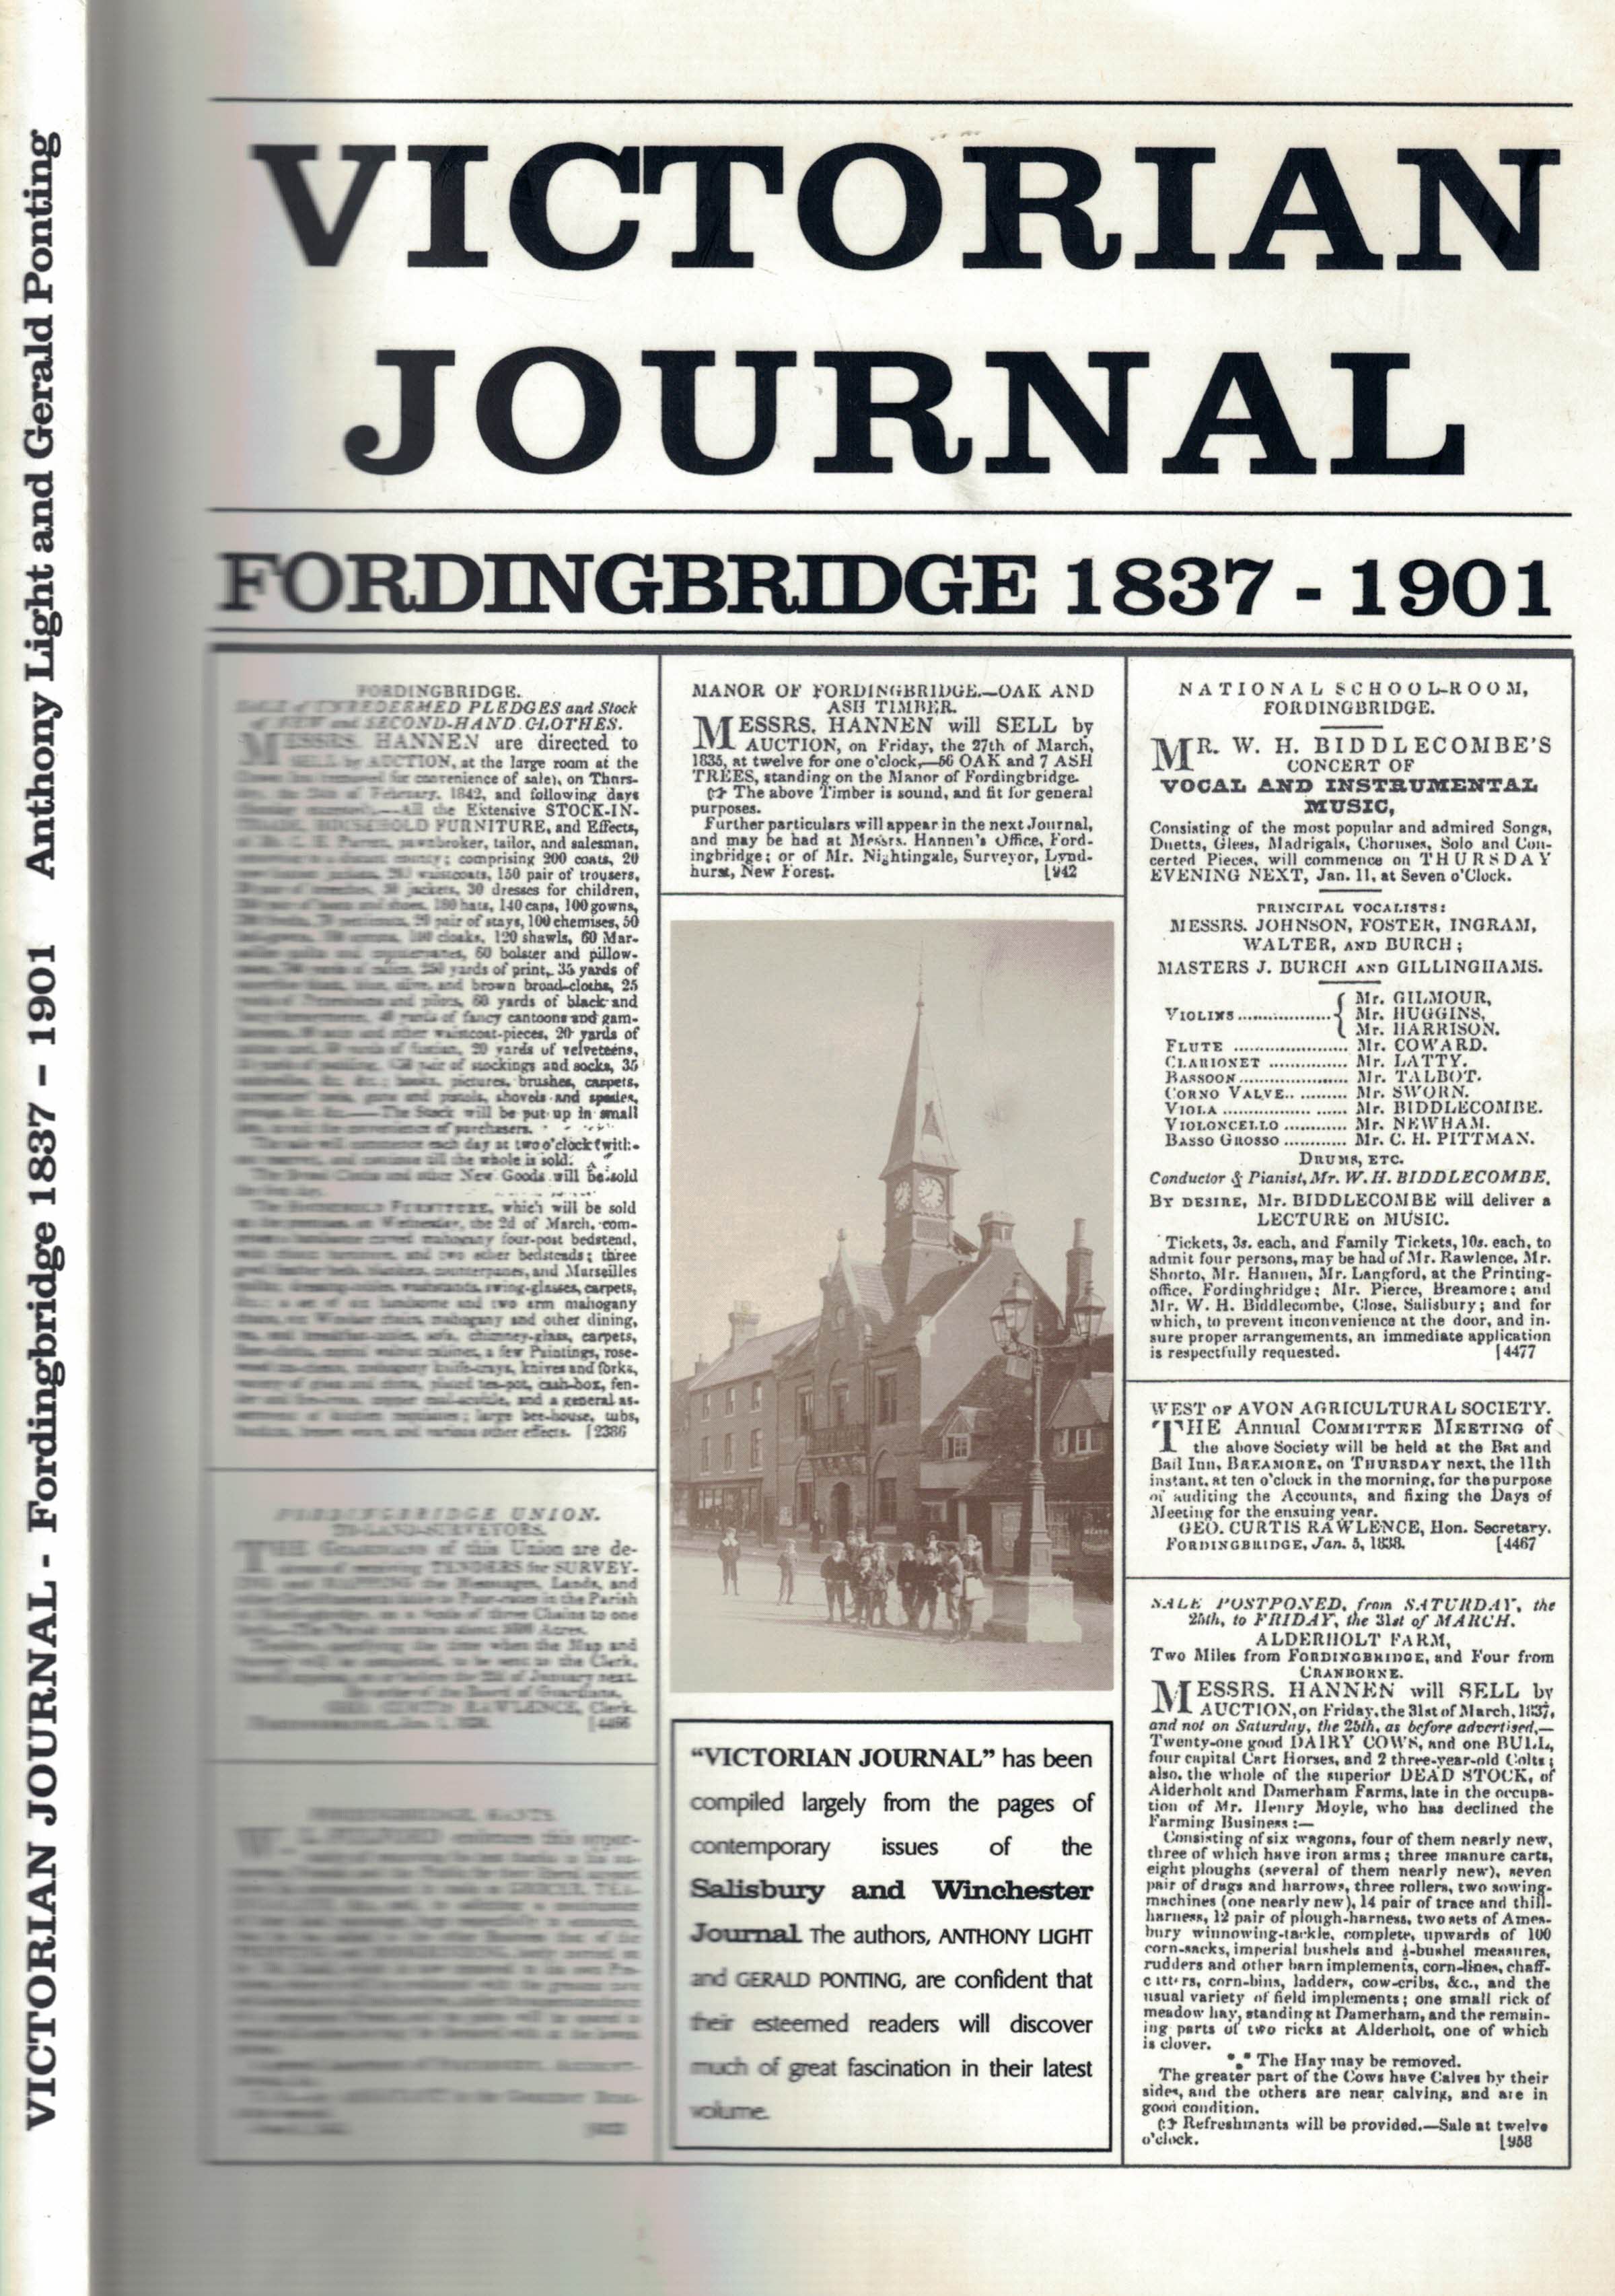 Victorian Journal. Fordingbridge 1837 - 1901.